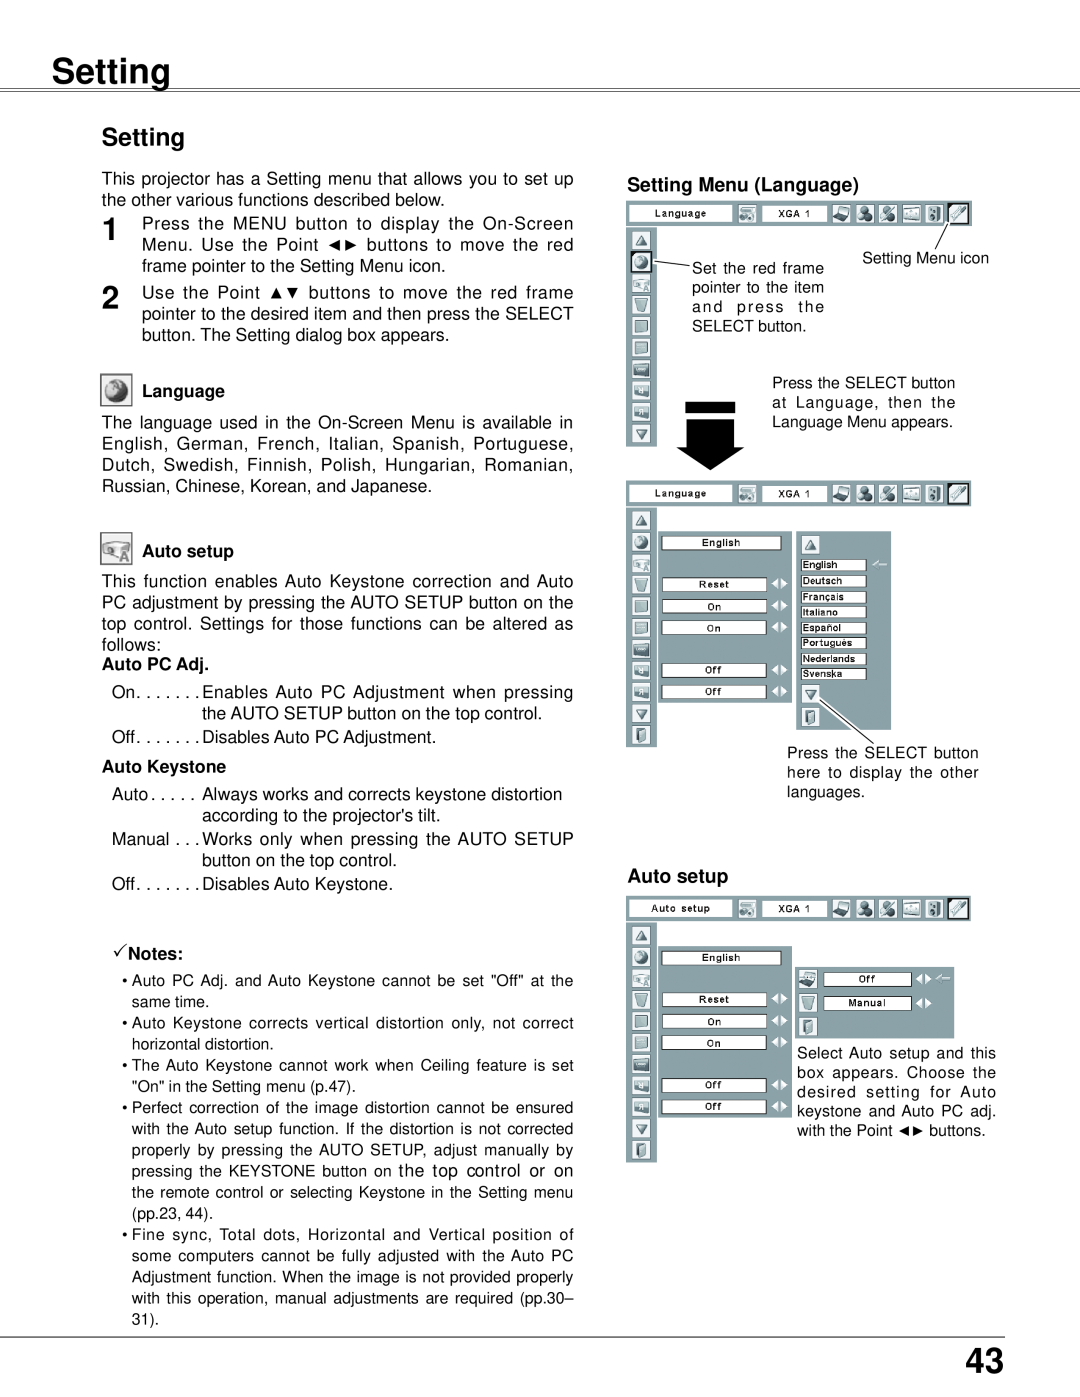 Eiki LC-XB42 owner manual Setting, Language, Auto setup, Auto PC Adj, Auto Keystone, Notes 